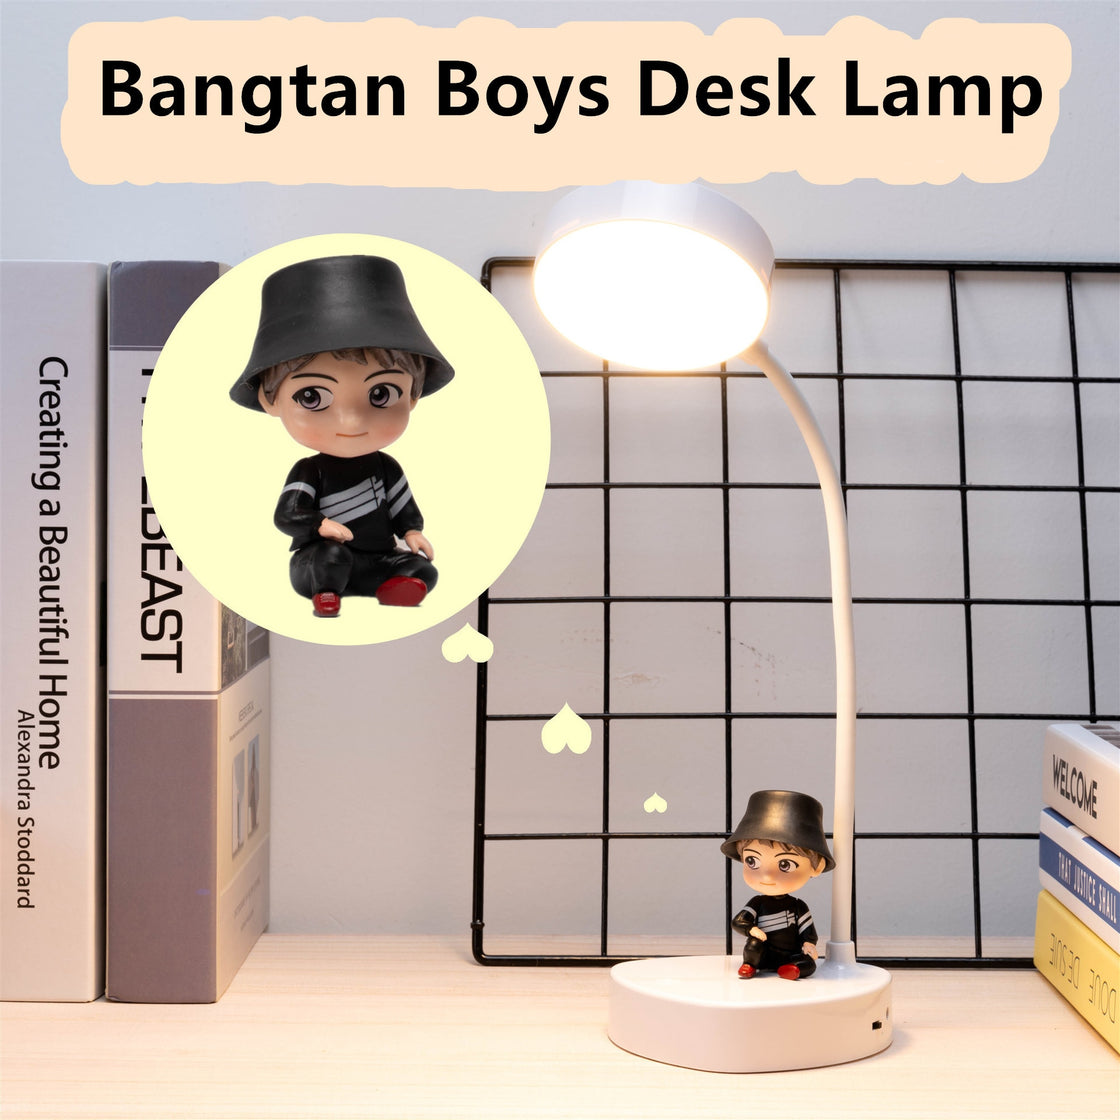 New Bangtan Boys TinyTAN Action Figures USB Night Light